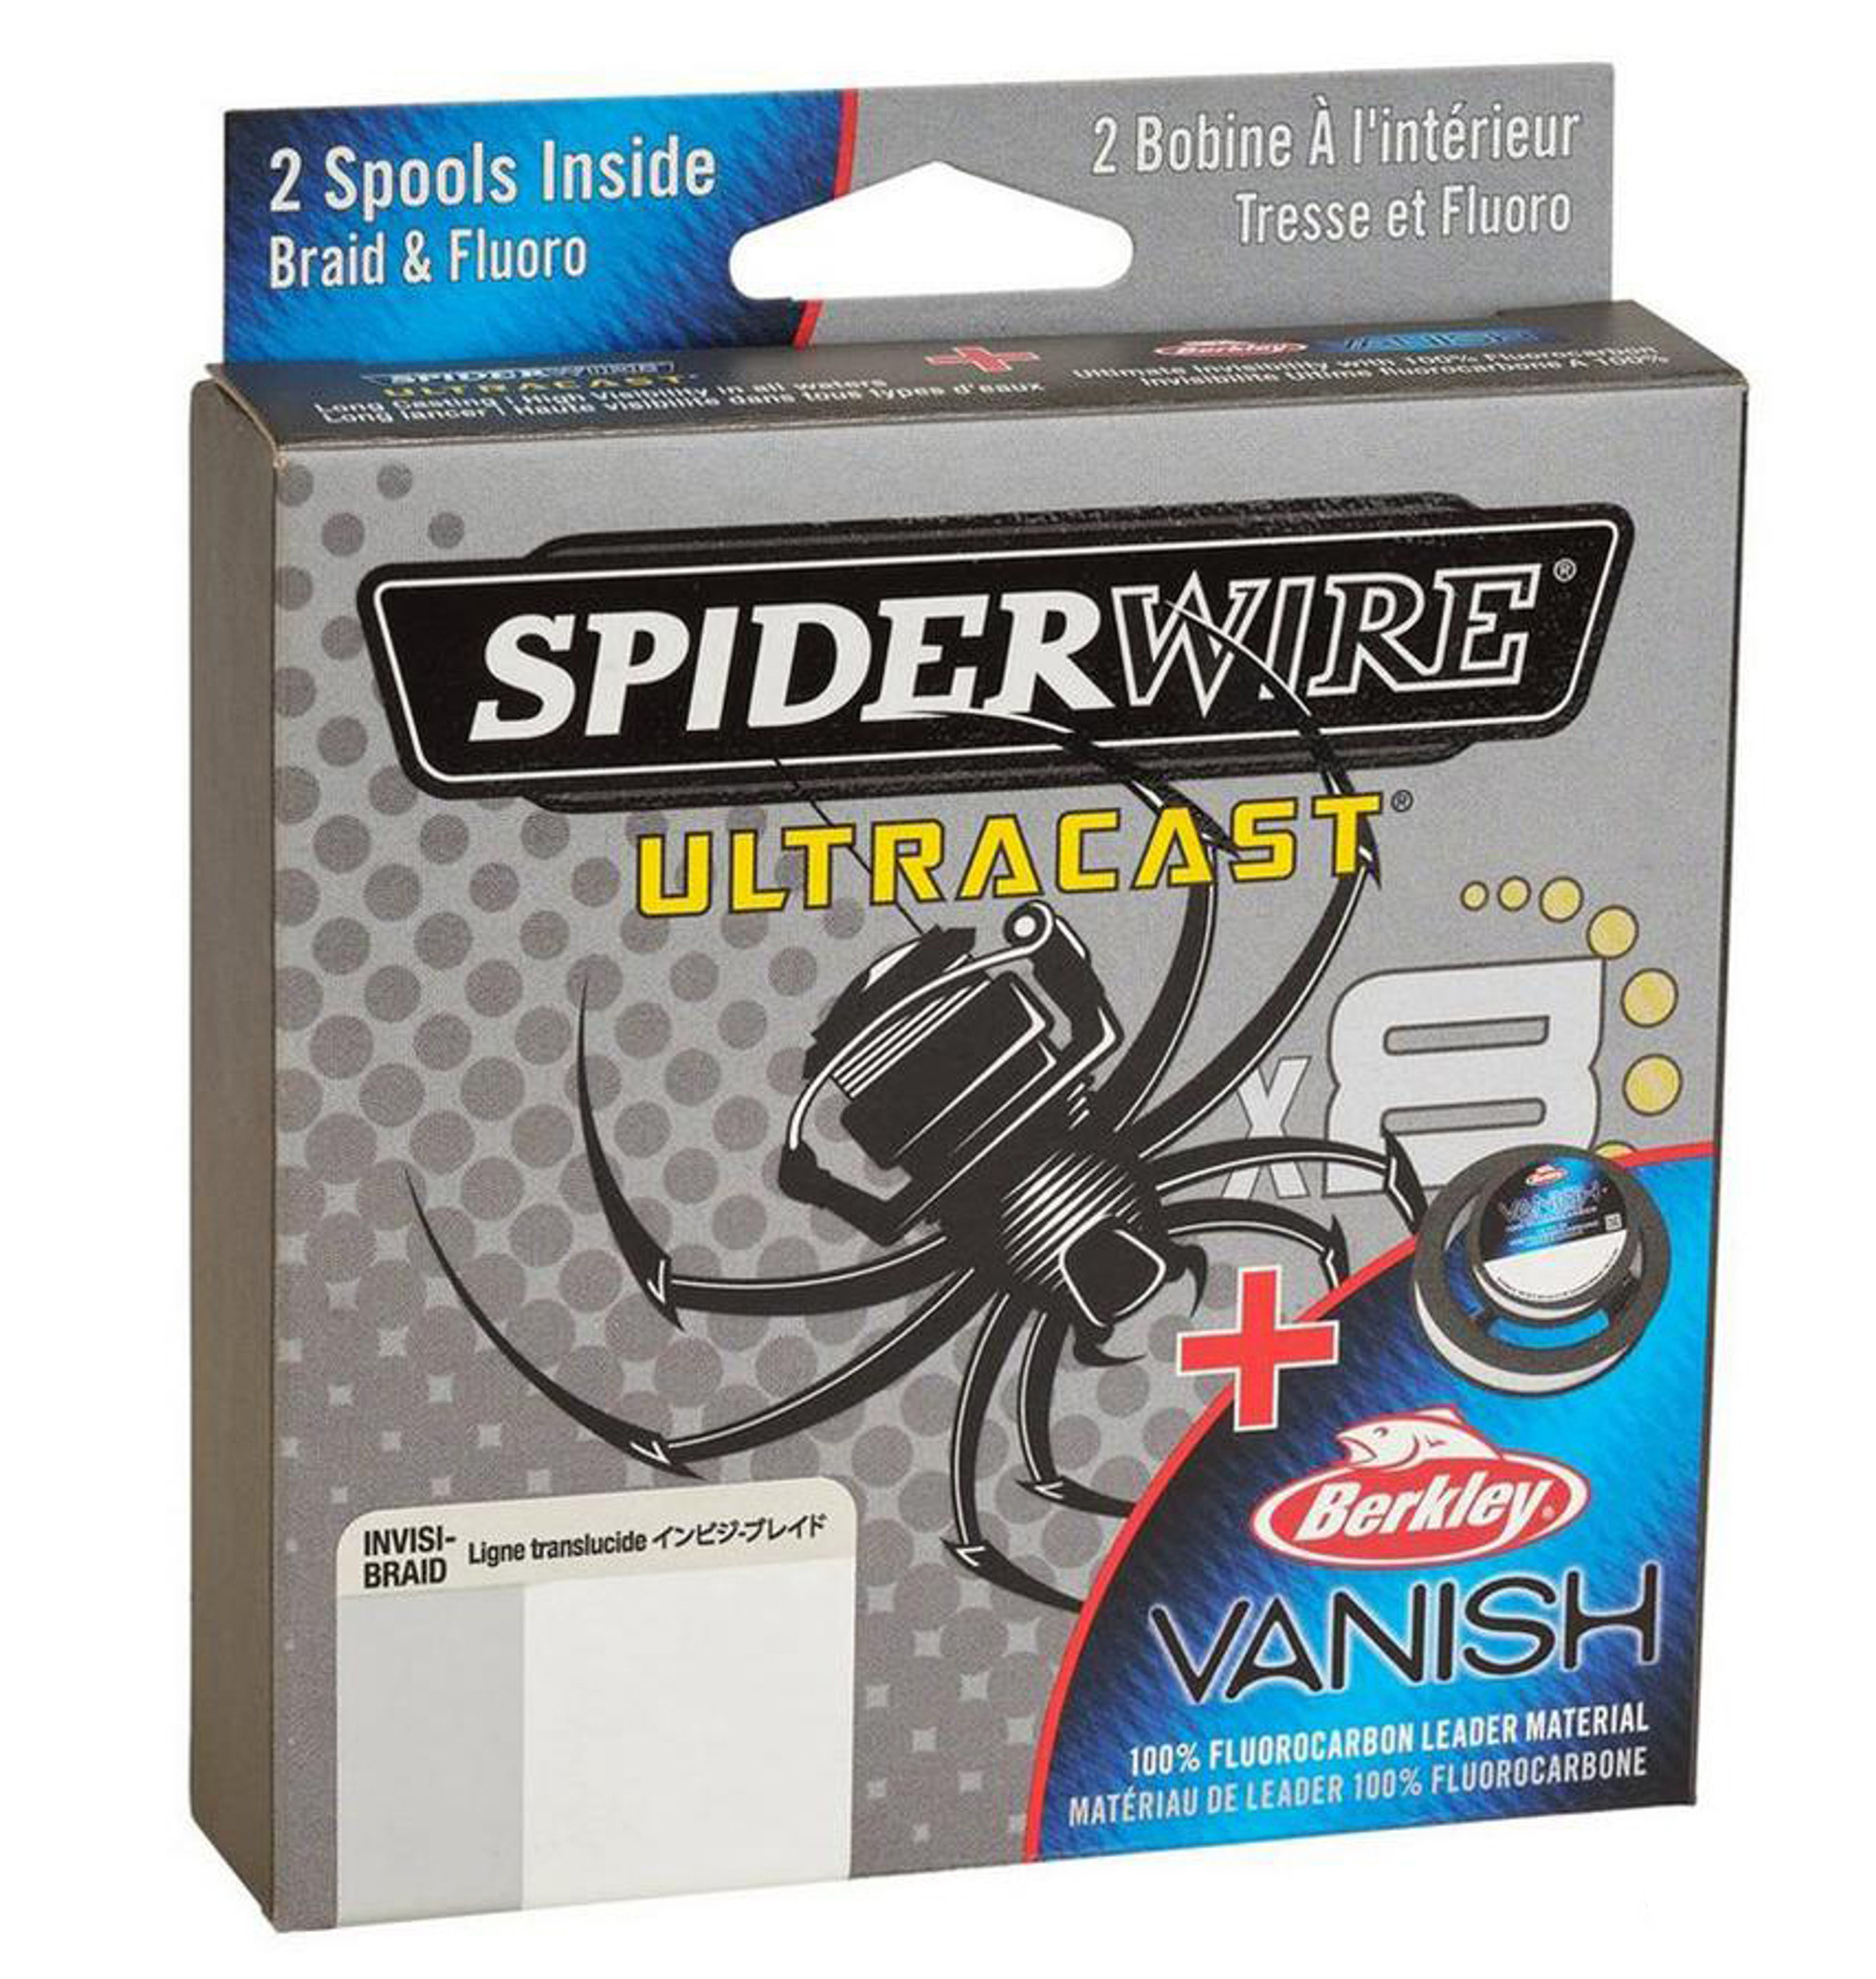 SpiderWire UltraCast Vanish Dual Spool Fluorocarbon Leader - Hero Outdoors